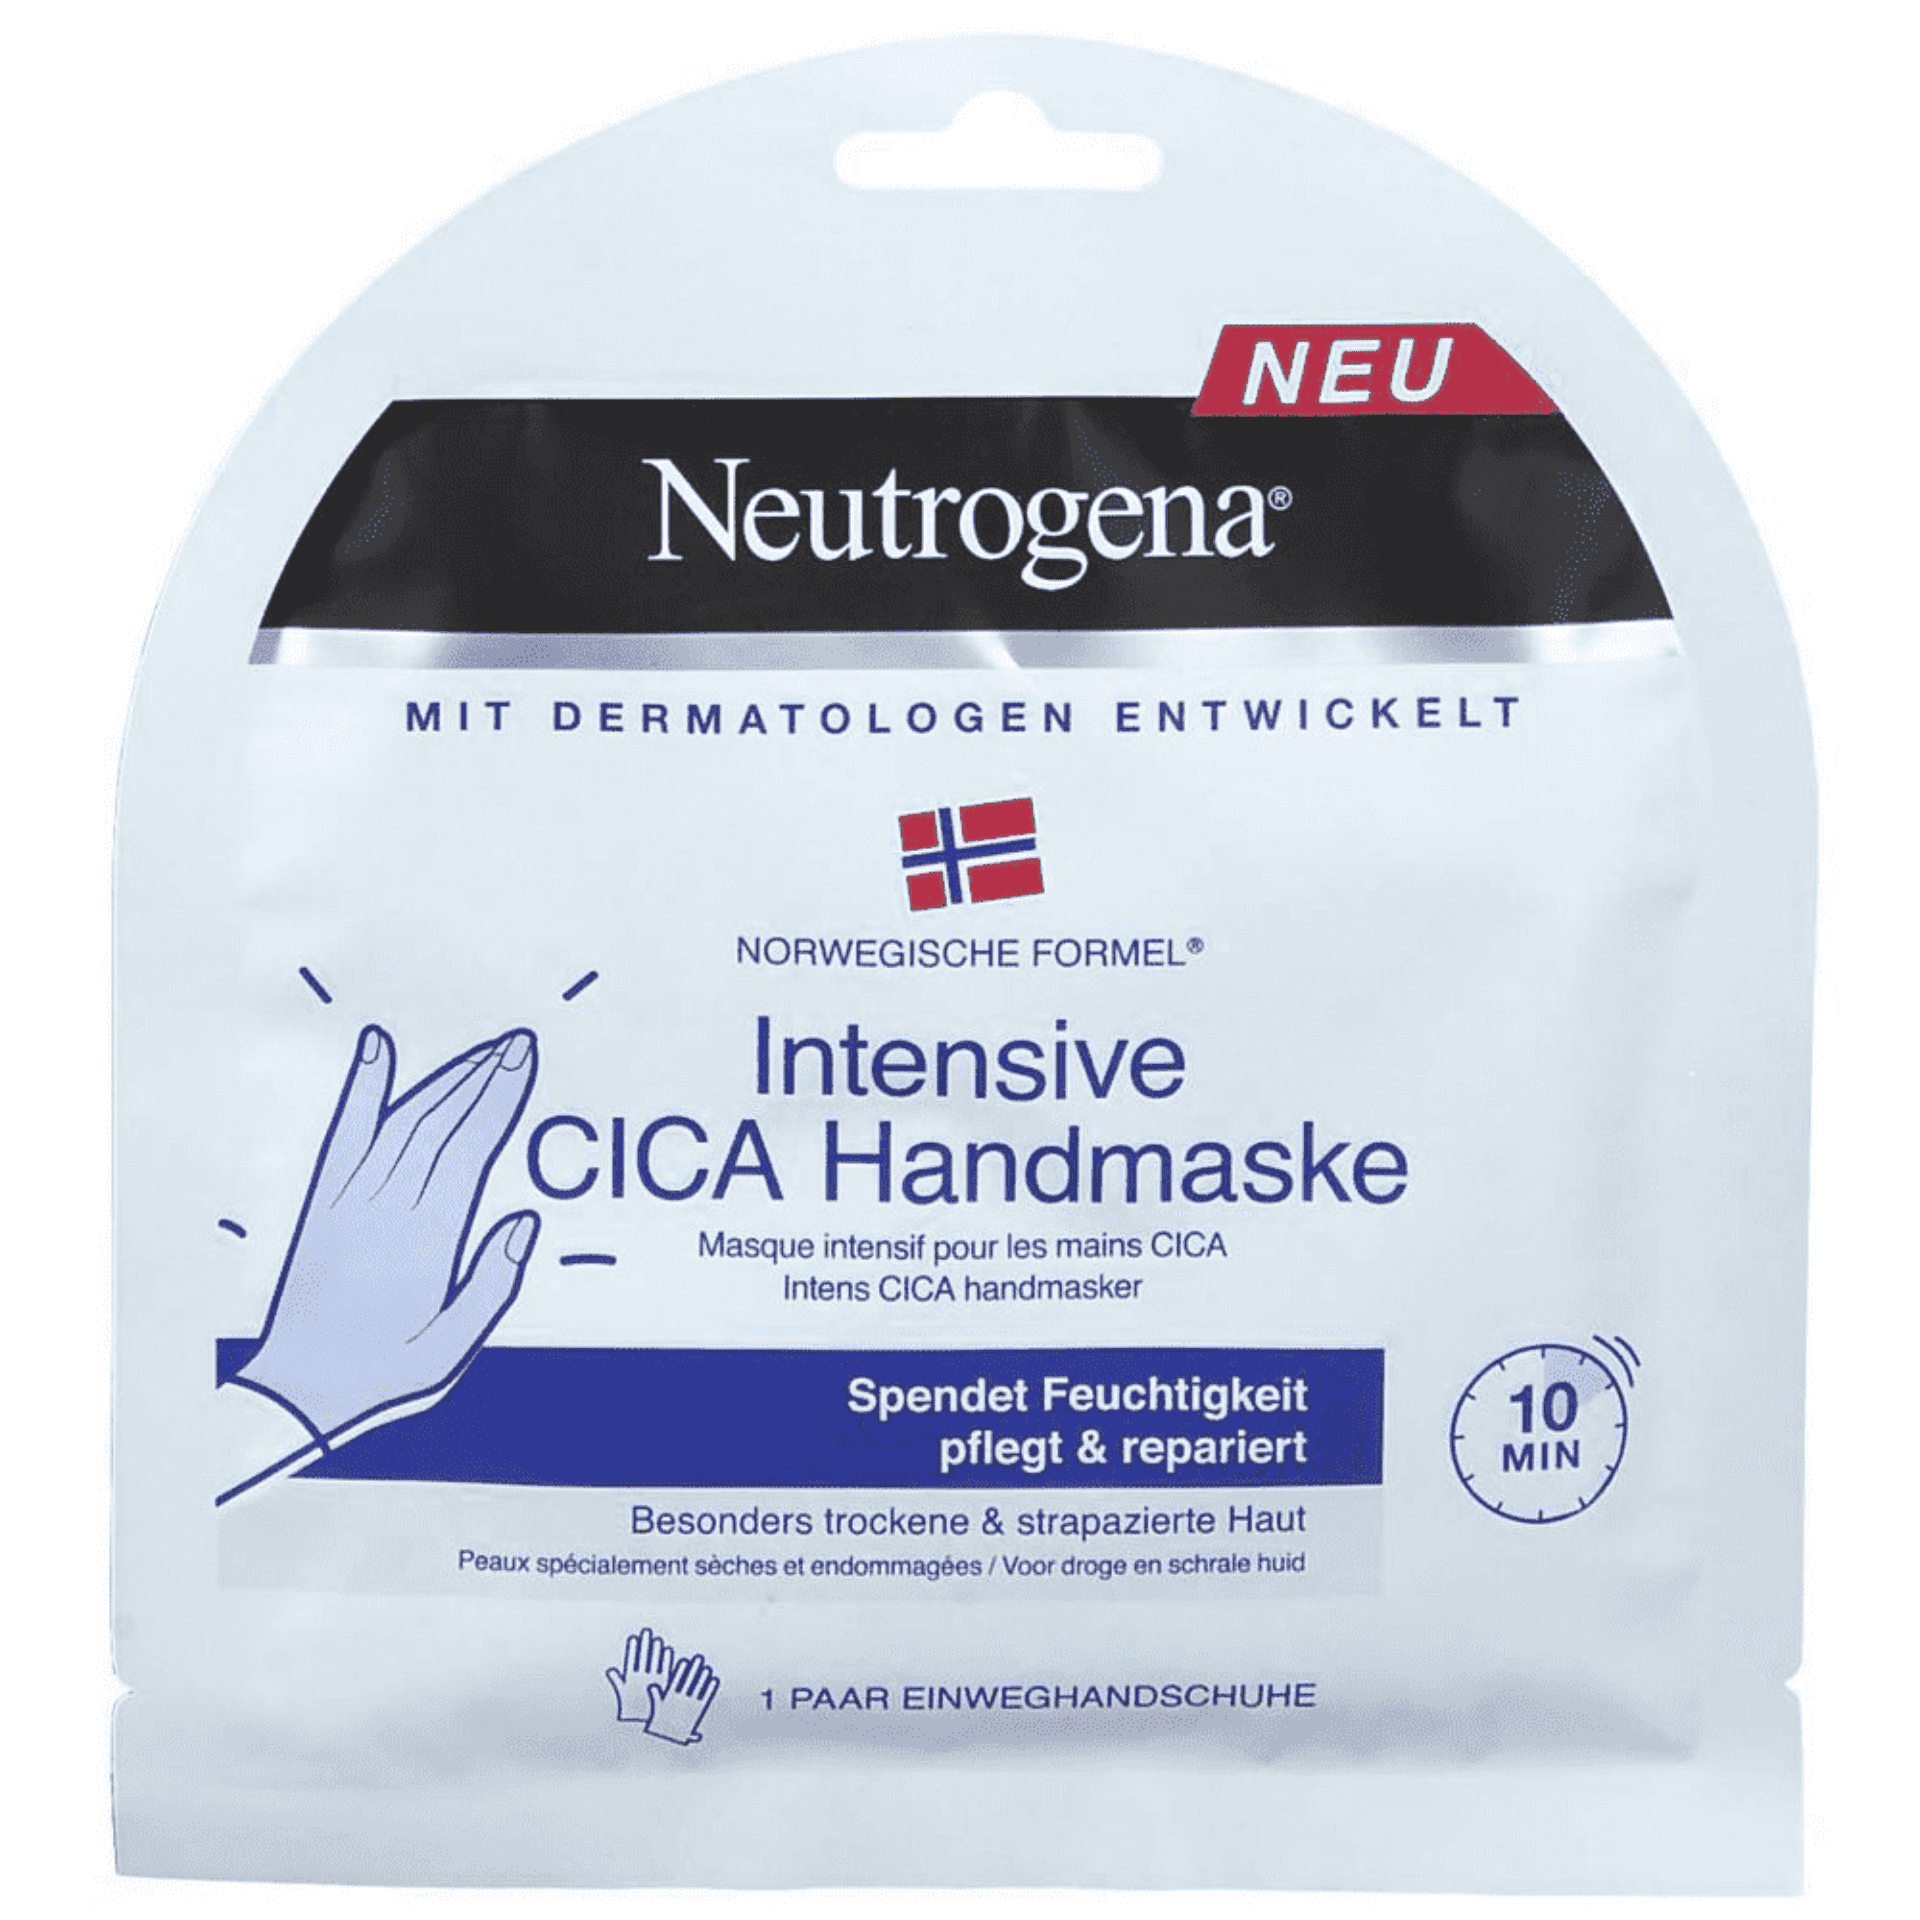 Neutrogena Intensief CICA Handmasker 1 paar